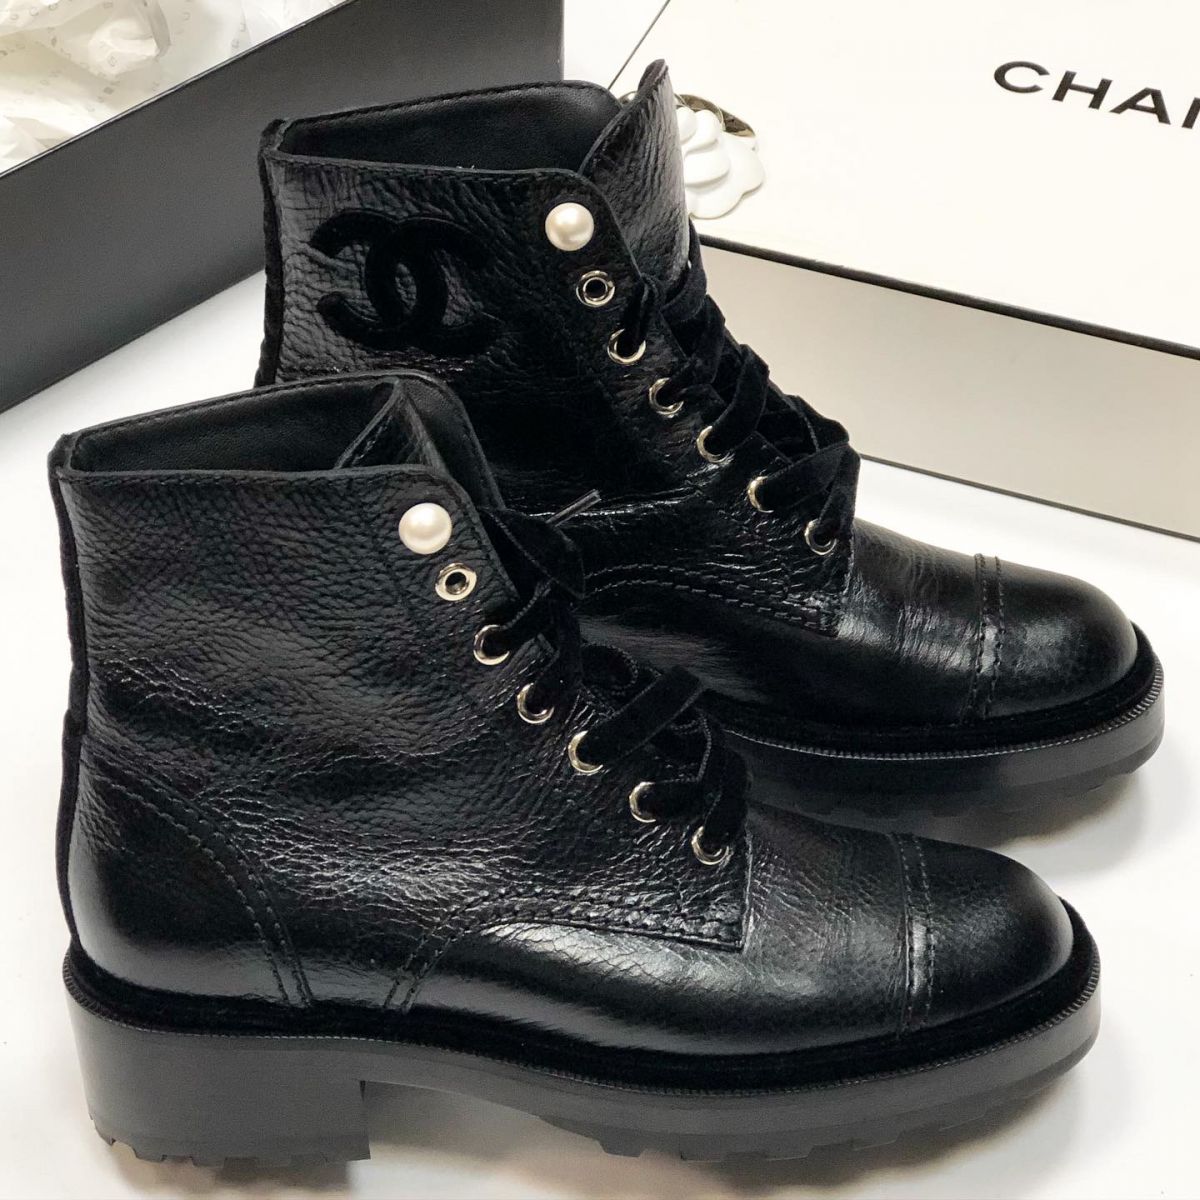 Ботинки Chanel размер 38 цена 53 847 руб /новые/ 